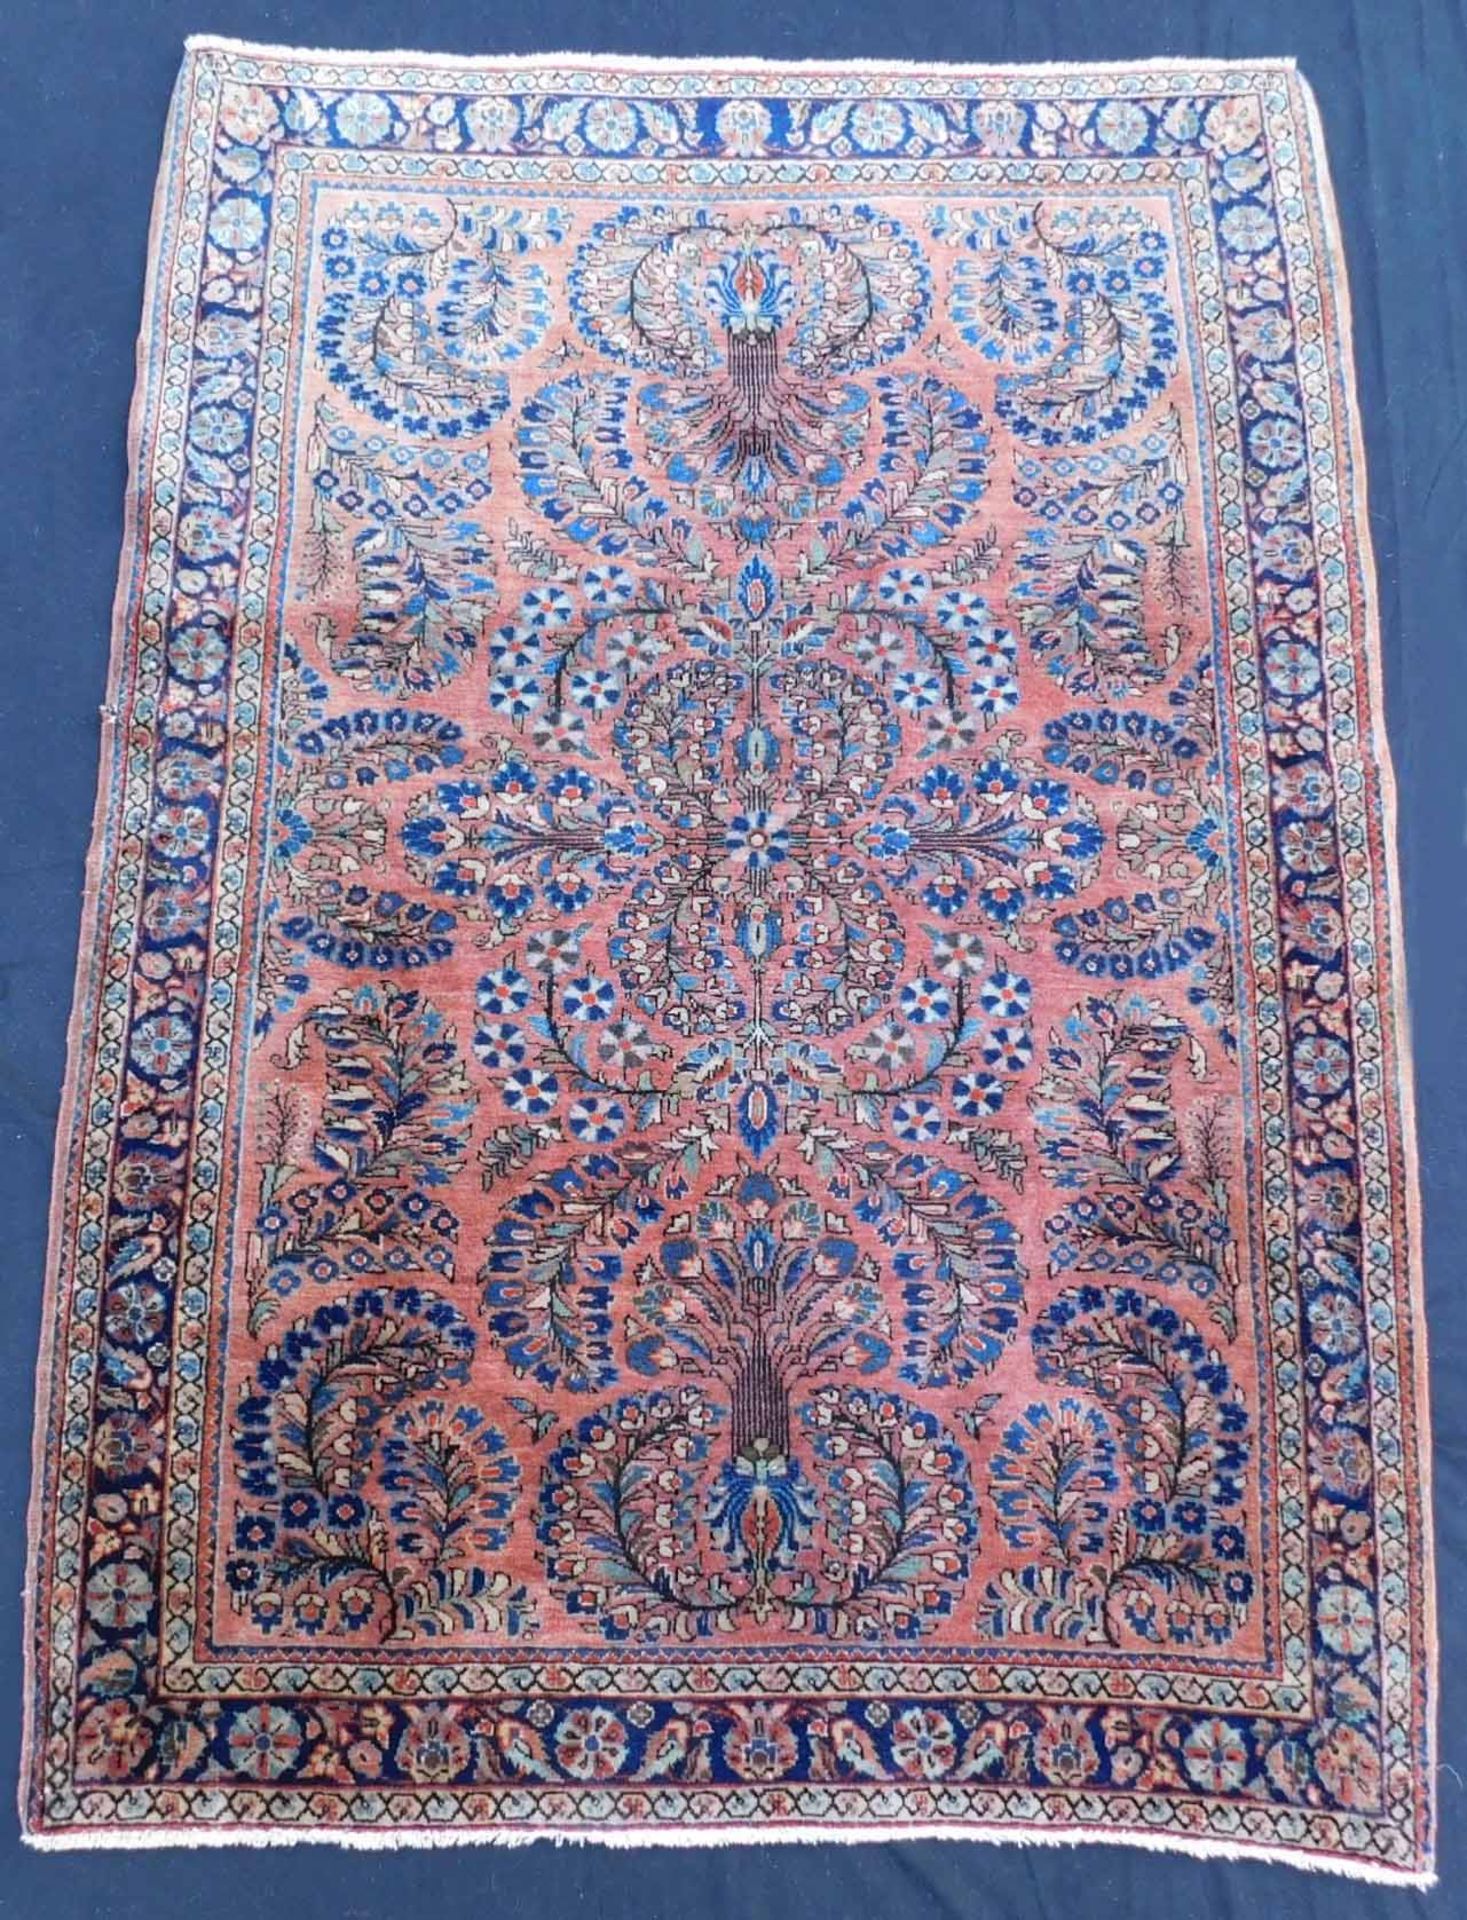 Saruk "American Saruk". Persian carpet. Iran, about 90 -110 years old.